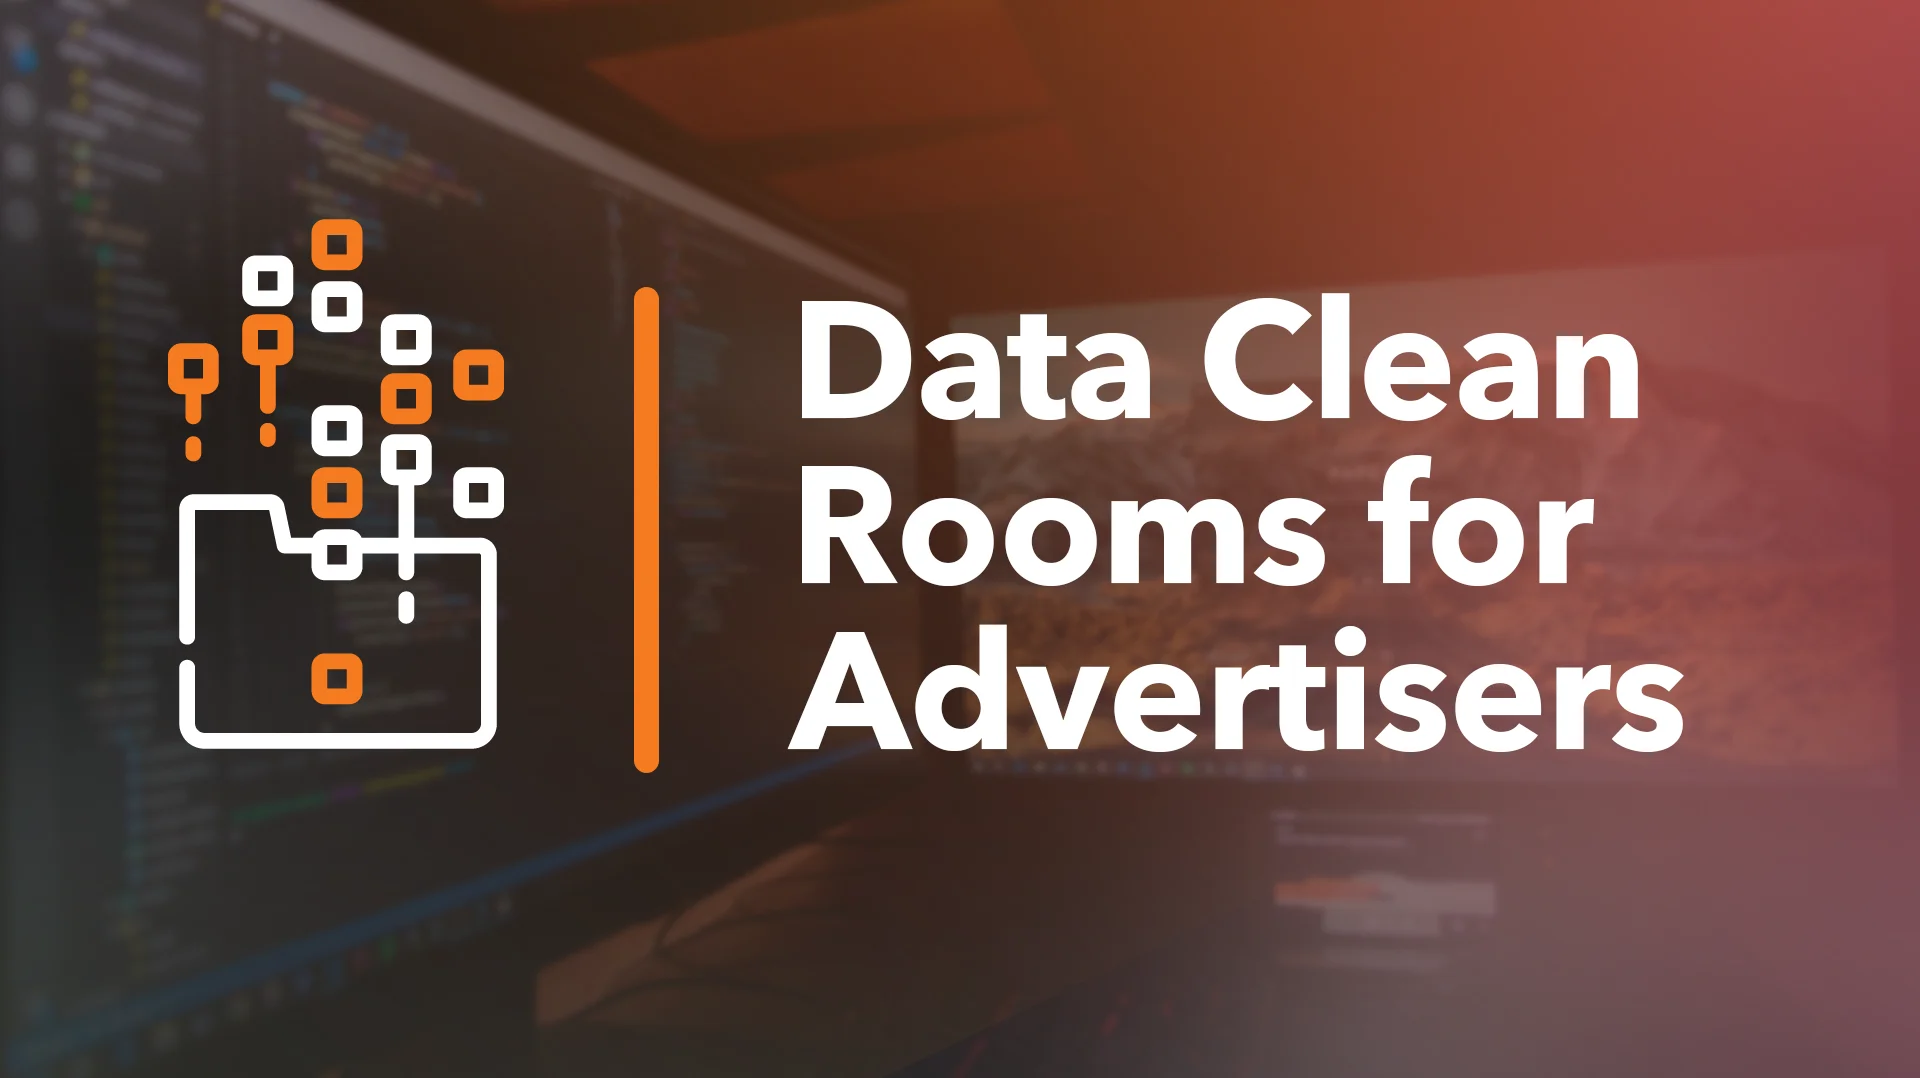 Data clean room